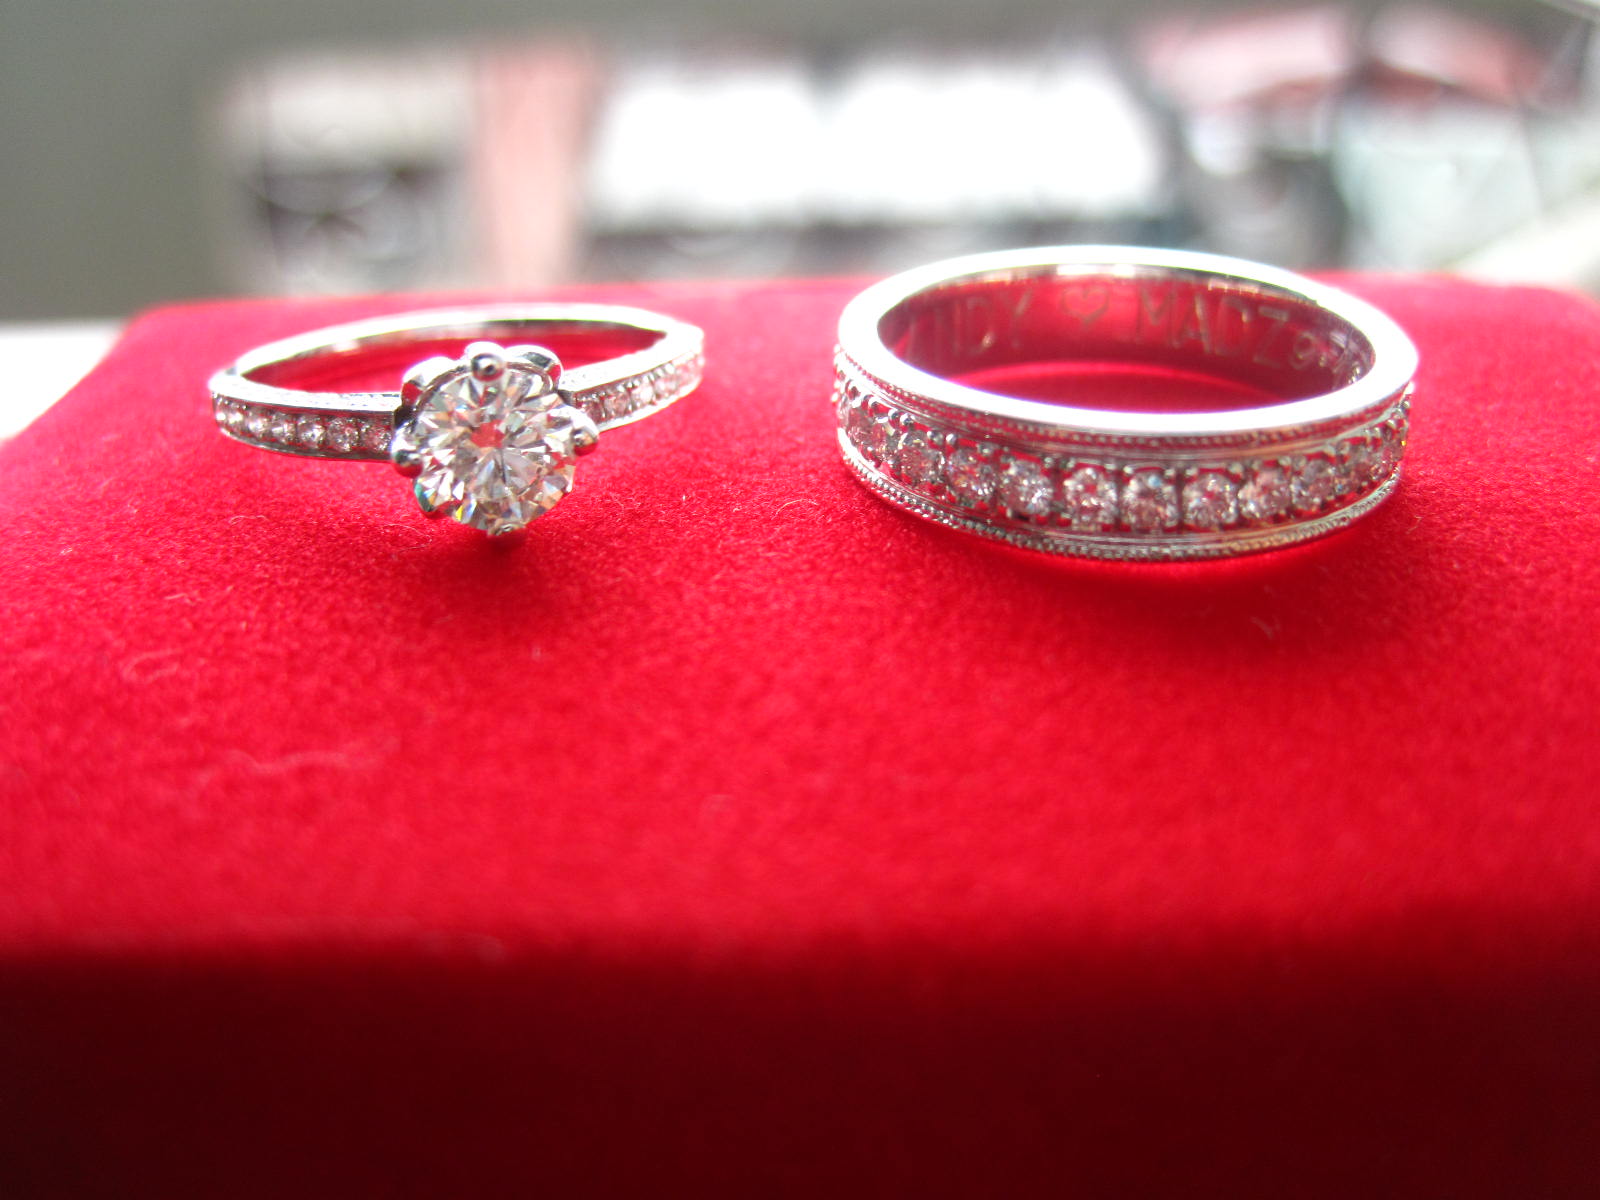 Cheap wedding rings in ongpin